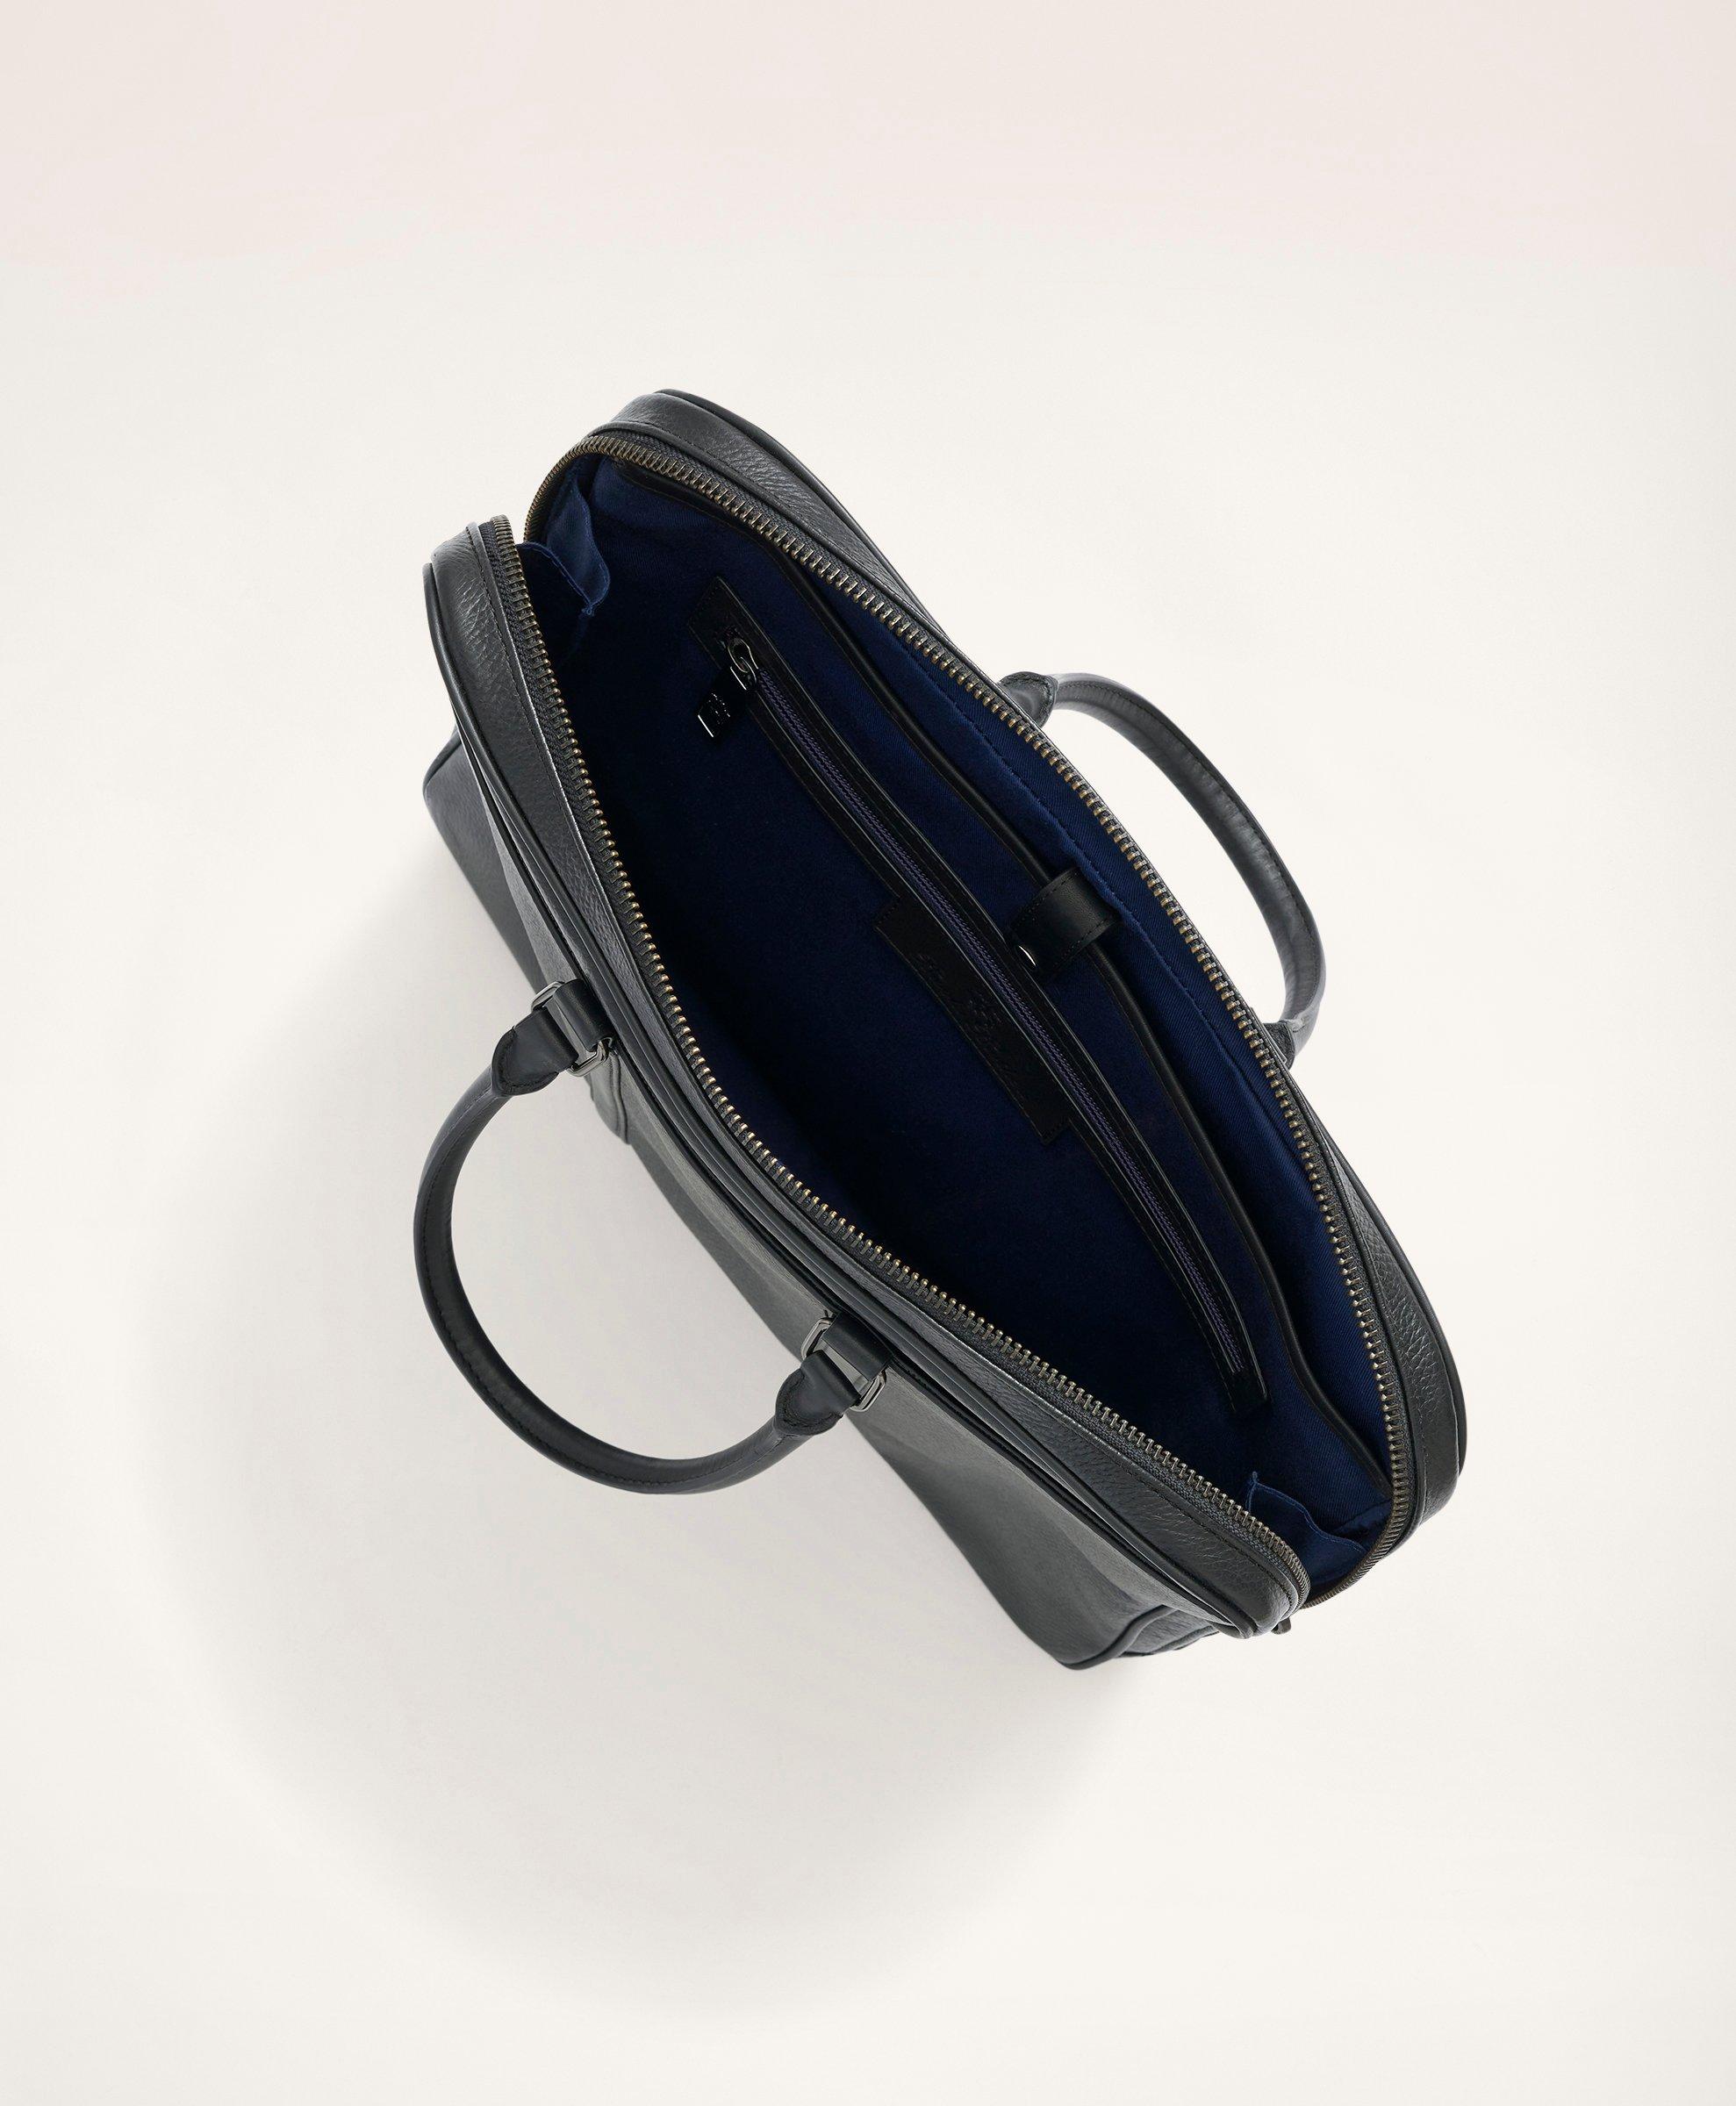 black leather briefcase for men